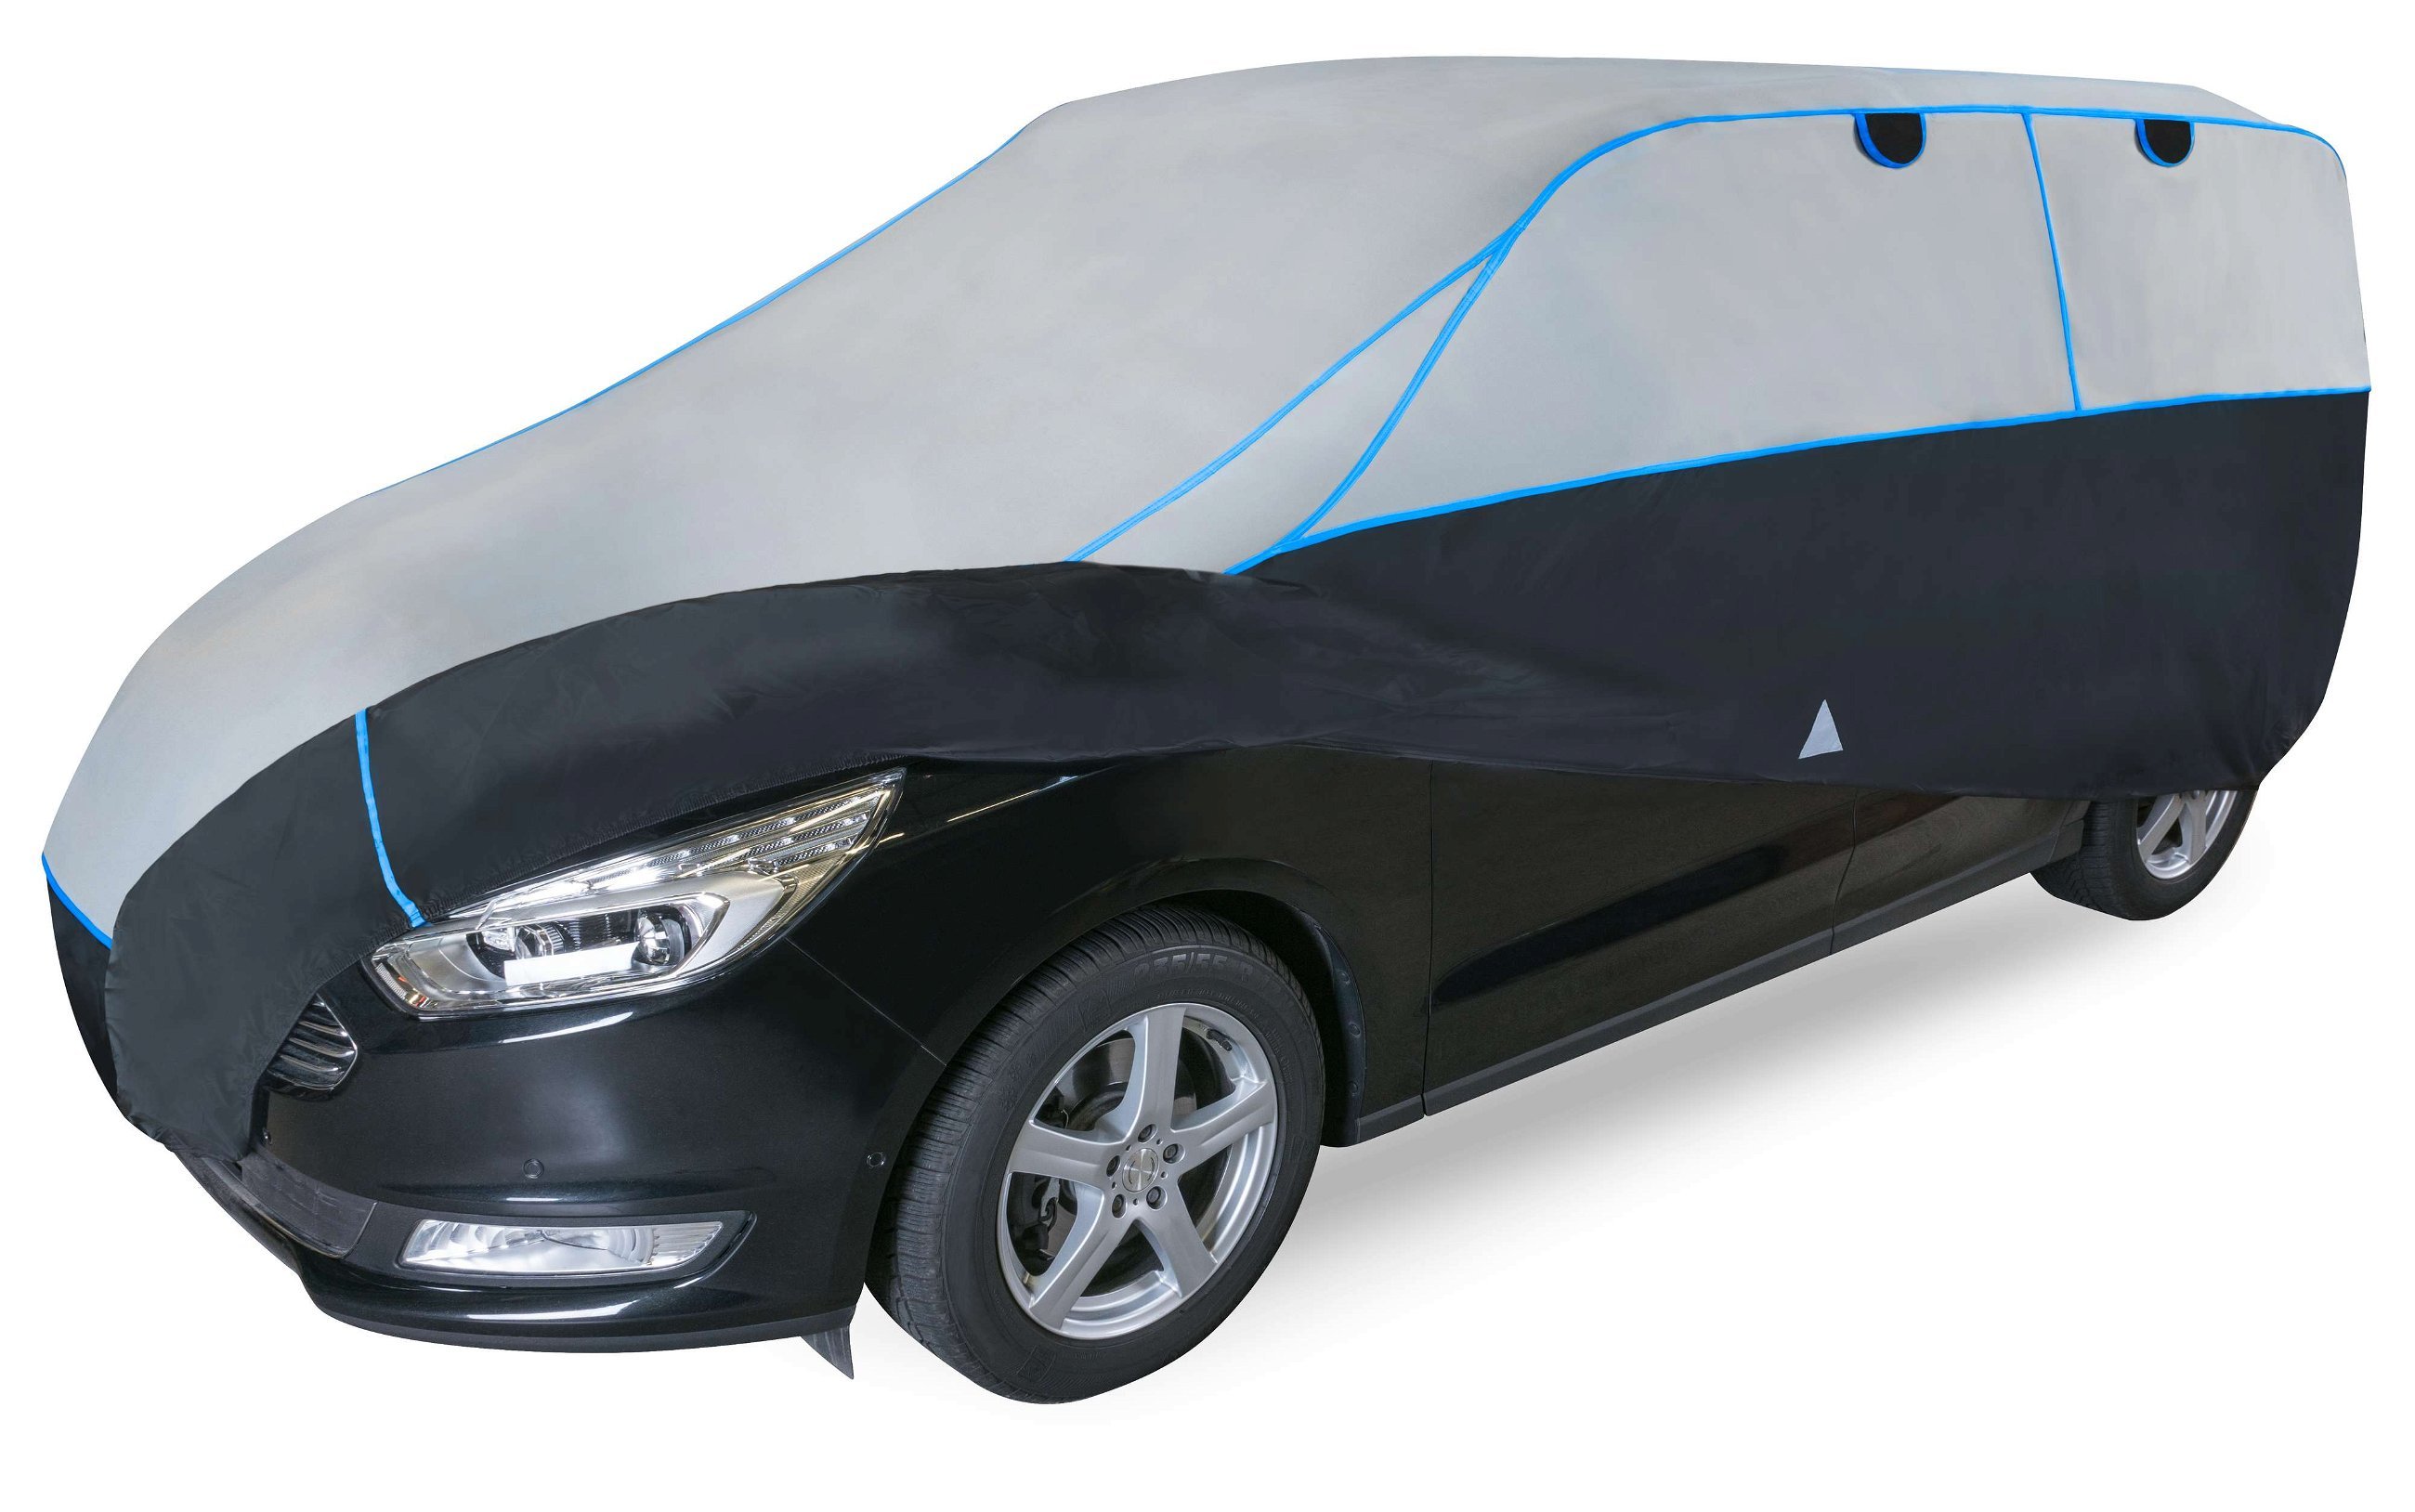 Auto-hagelbeschermhoes Comfort Protect SUV XL 520x185x155